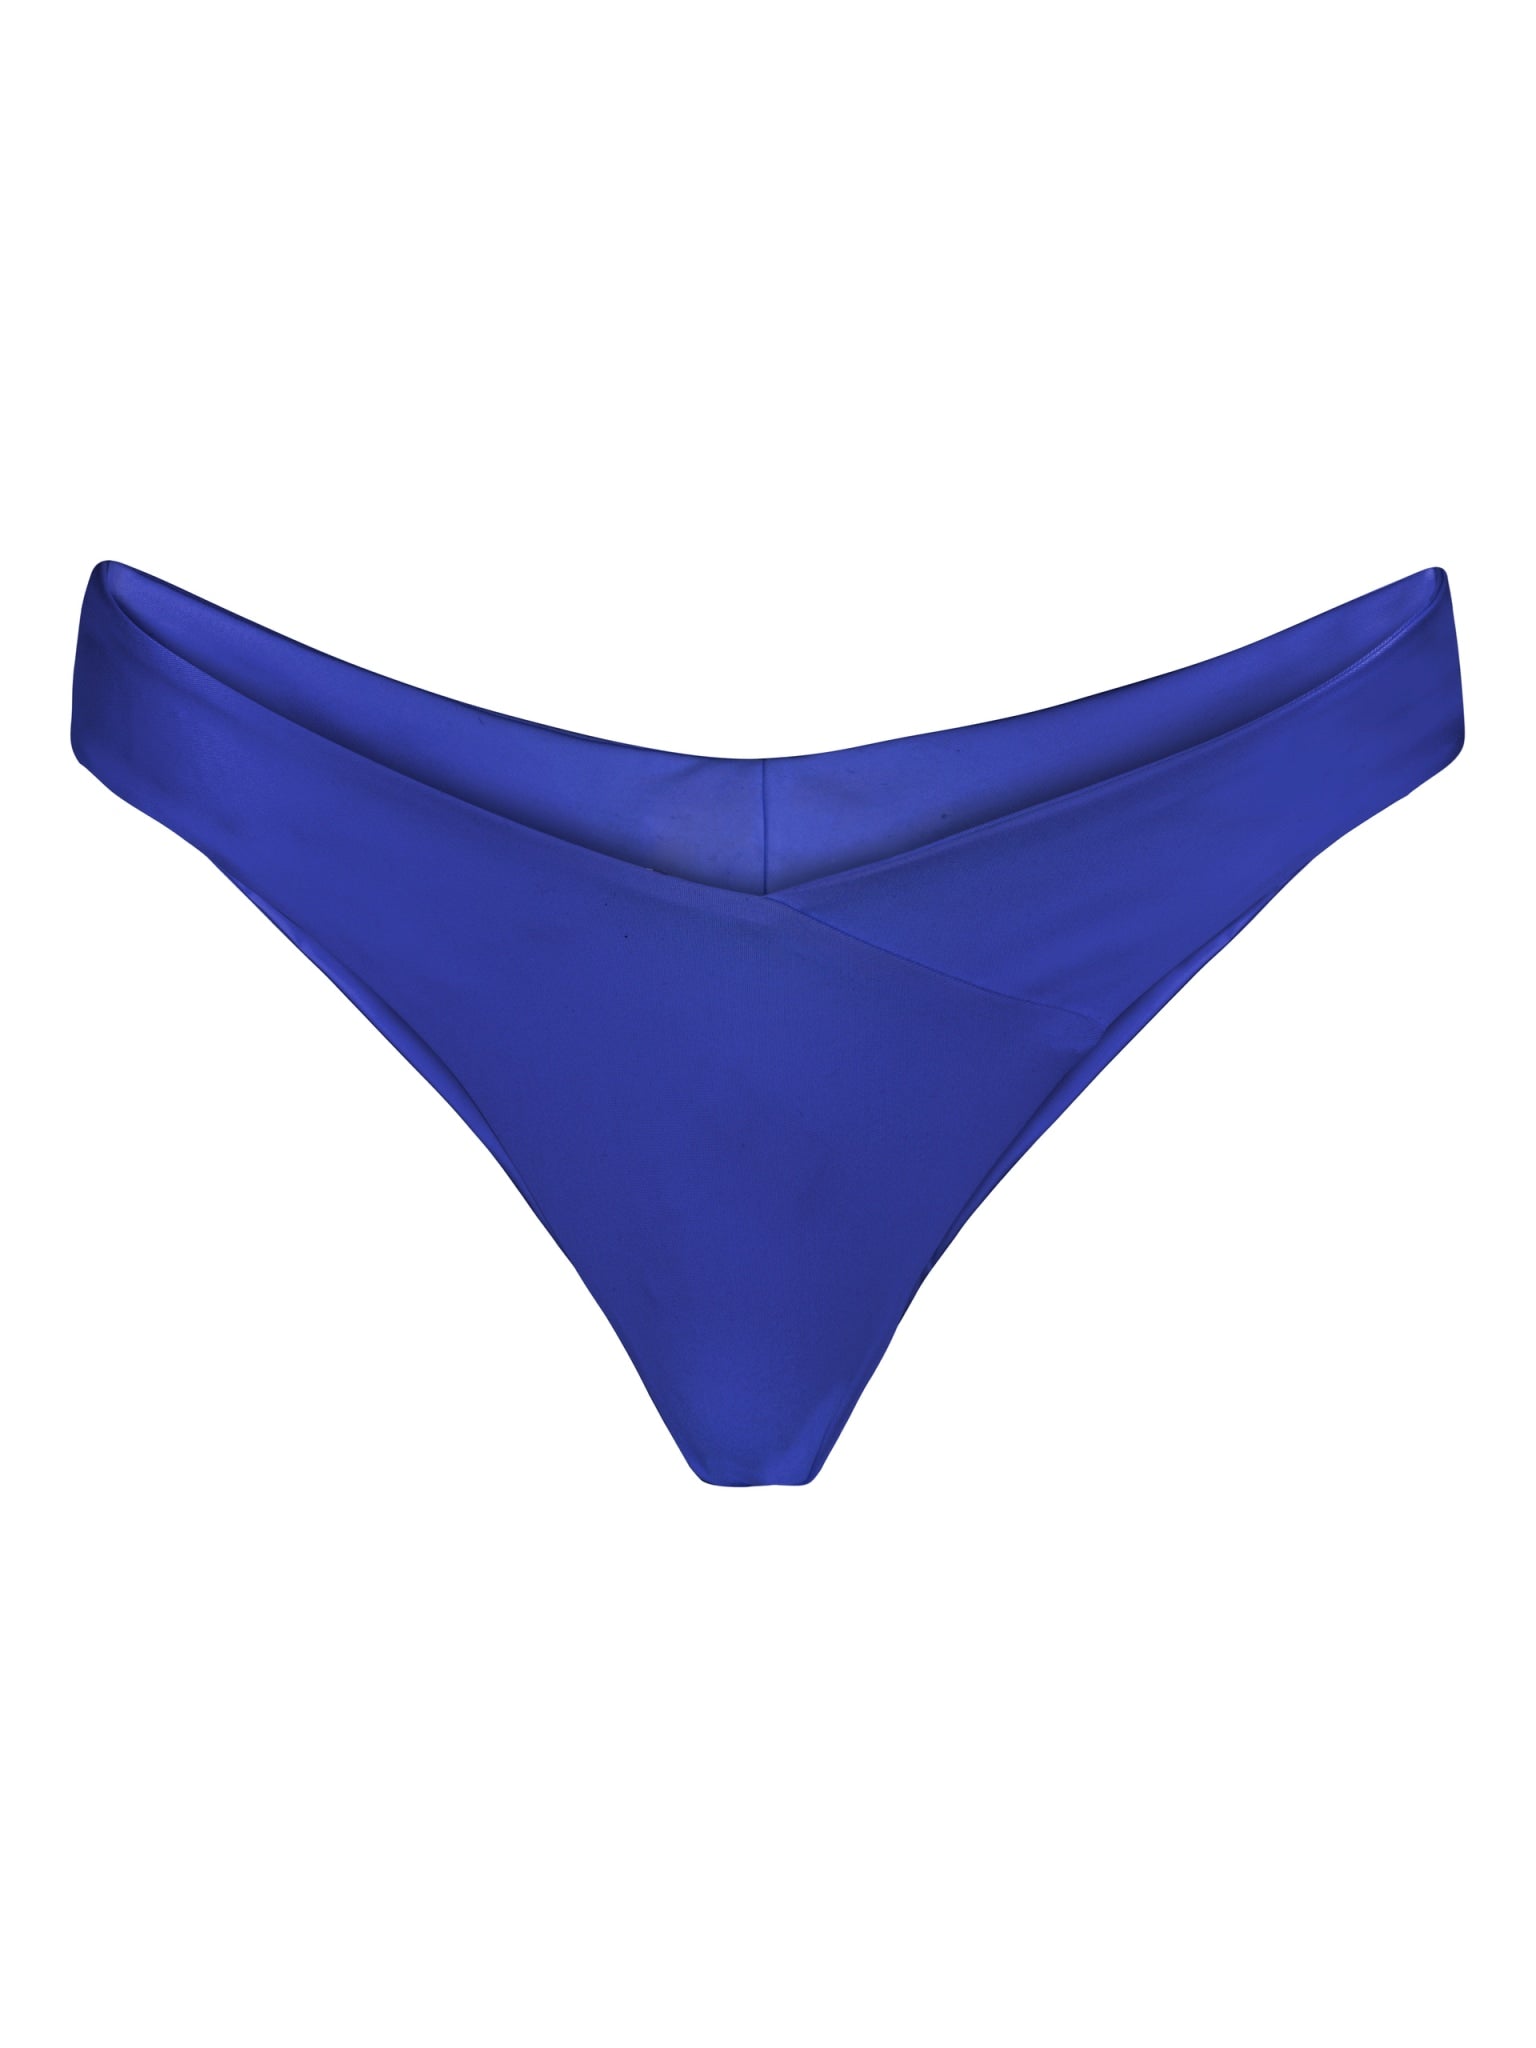 Canggu V-shaped bikini bottom - Cartel Blue